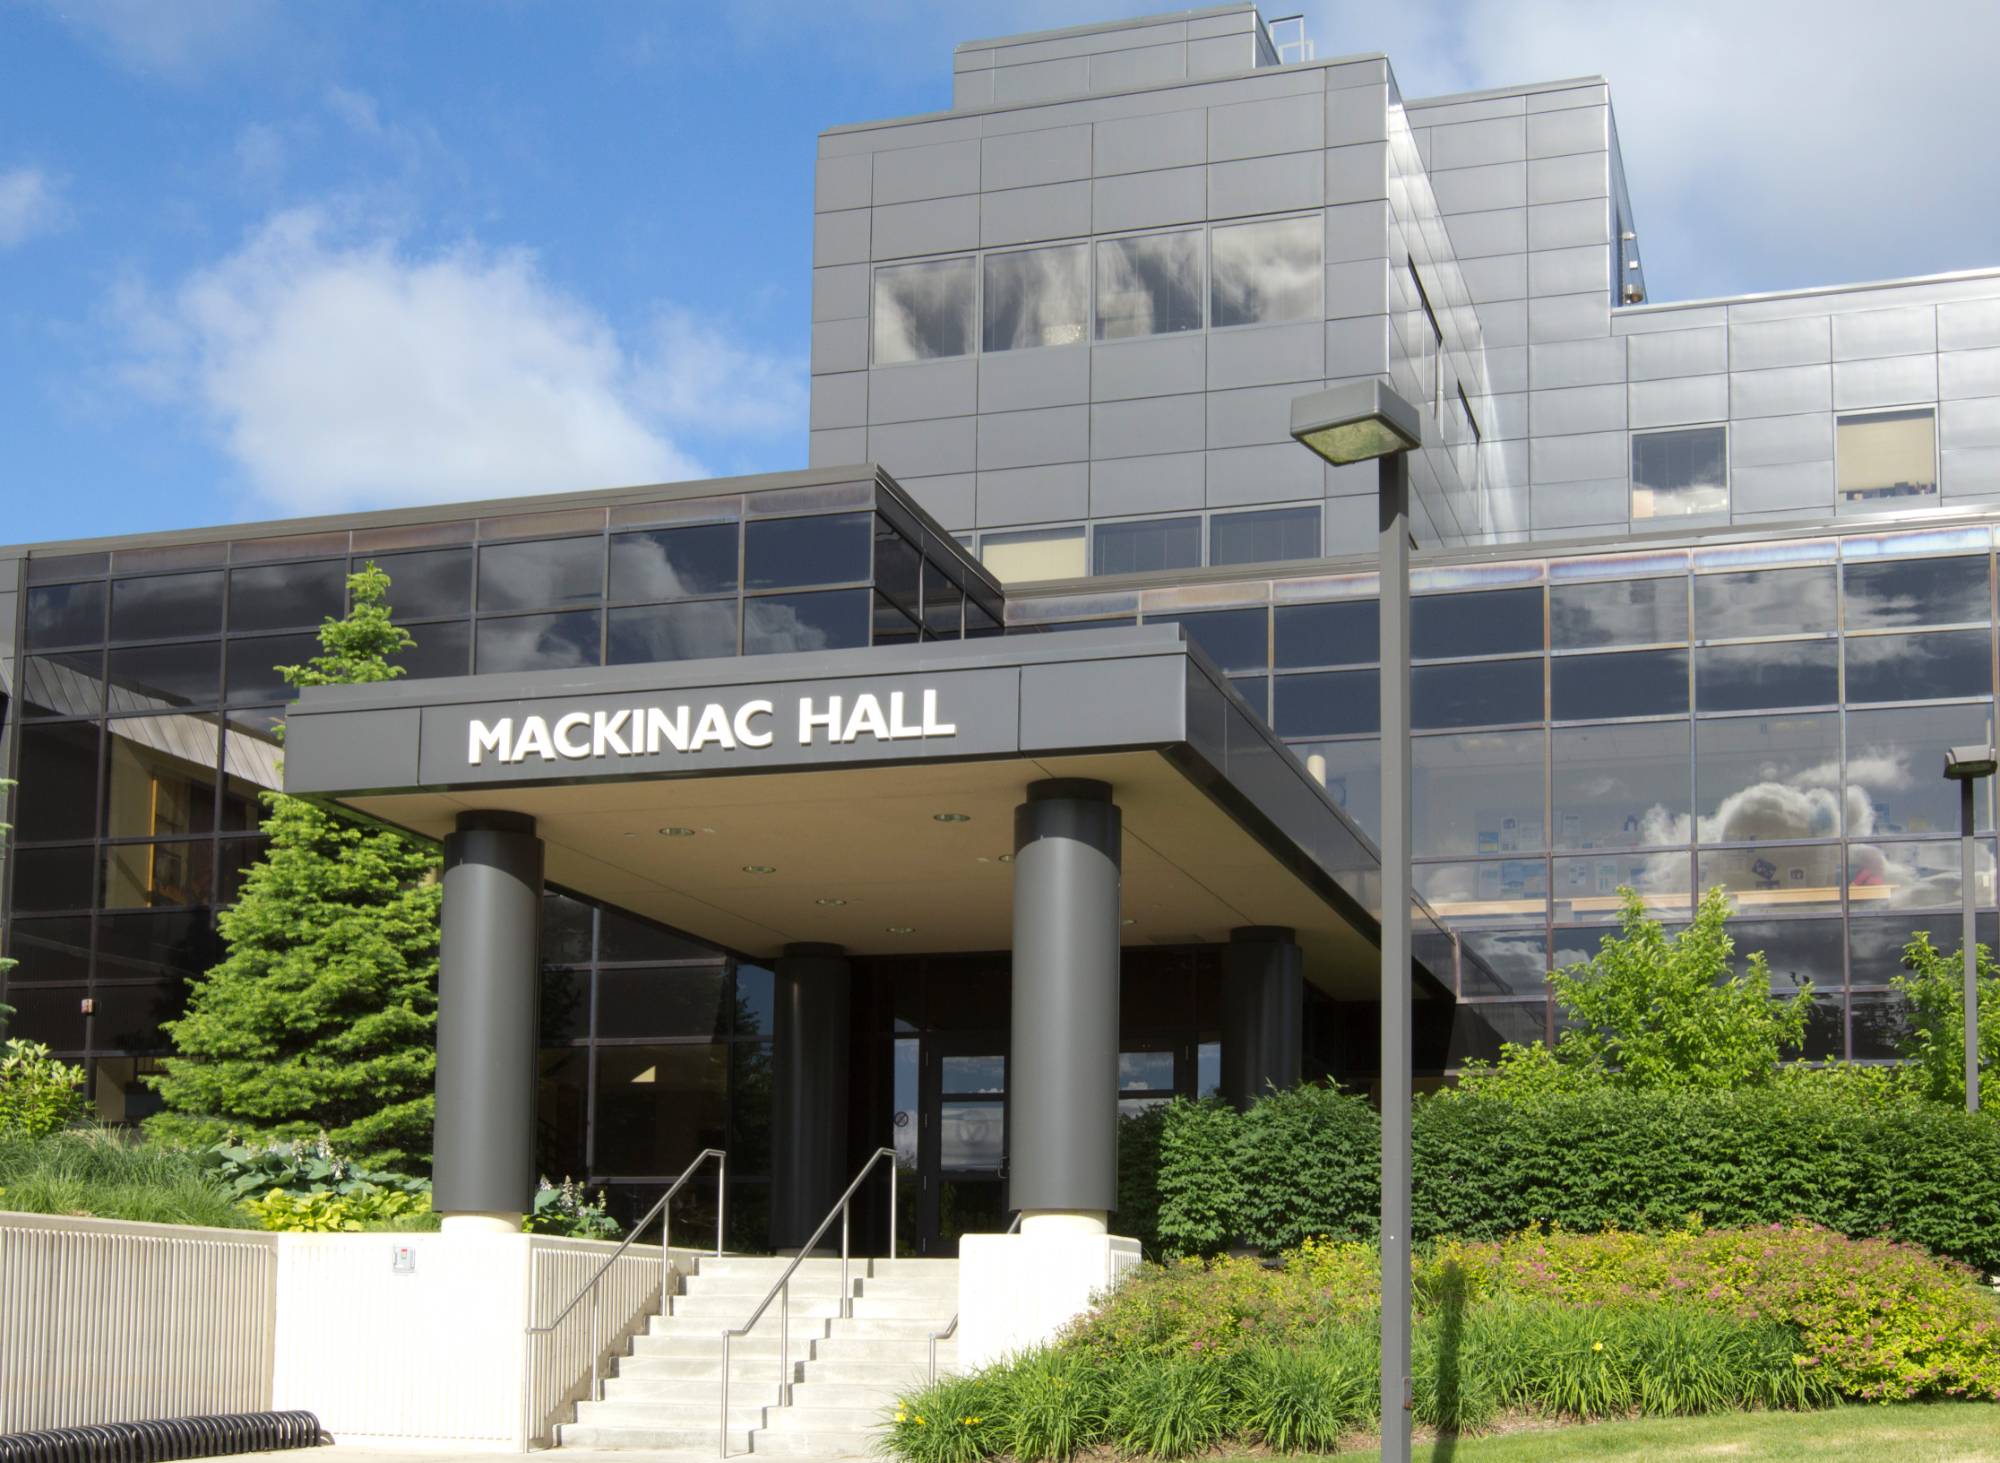 The exterior of Mackinac Hall.